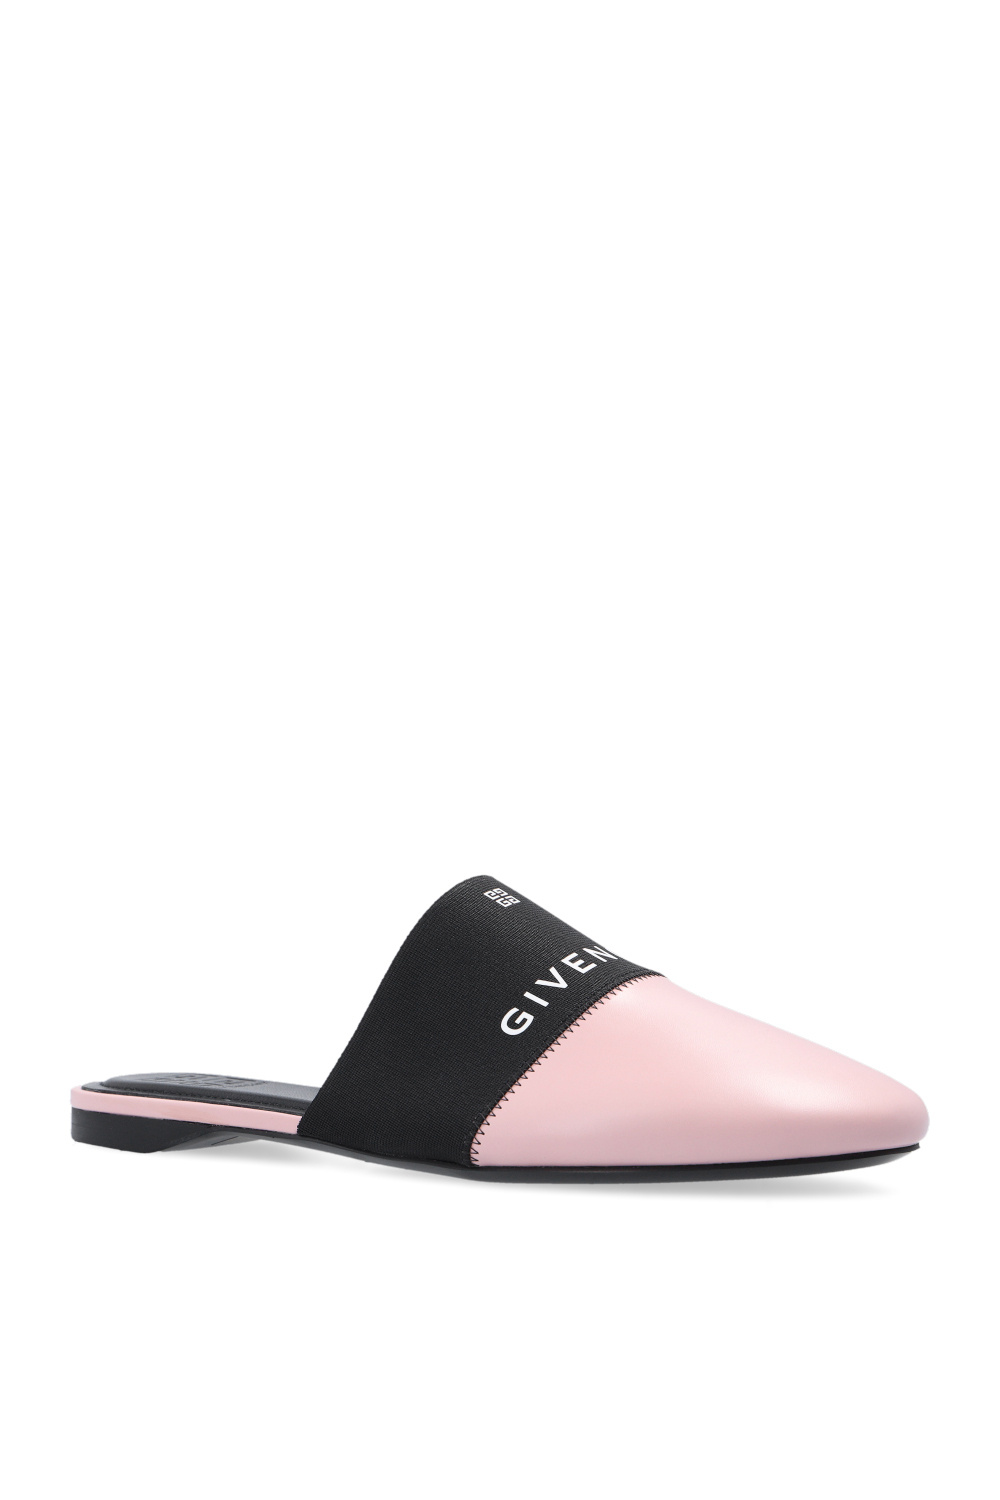 Givenchy 'Bedford' slides | Women's Shoes | Vitkac